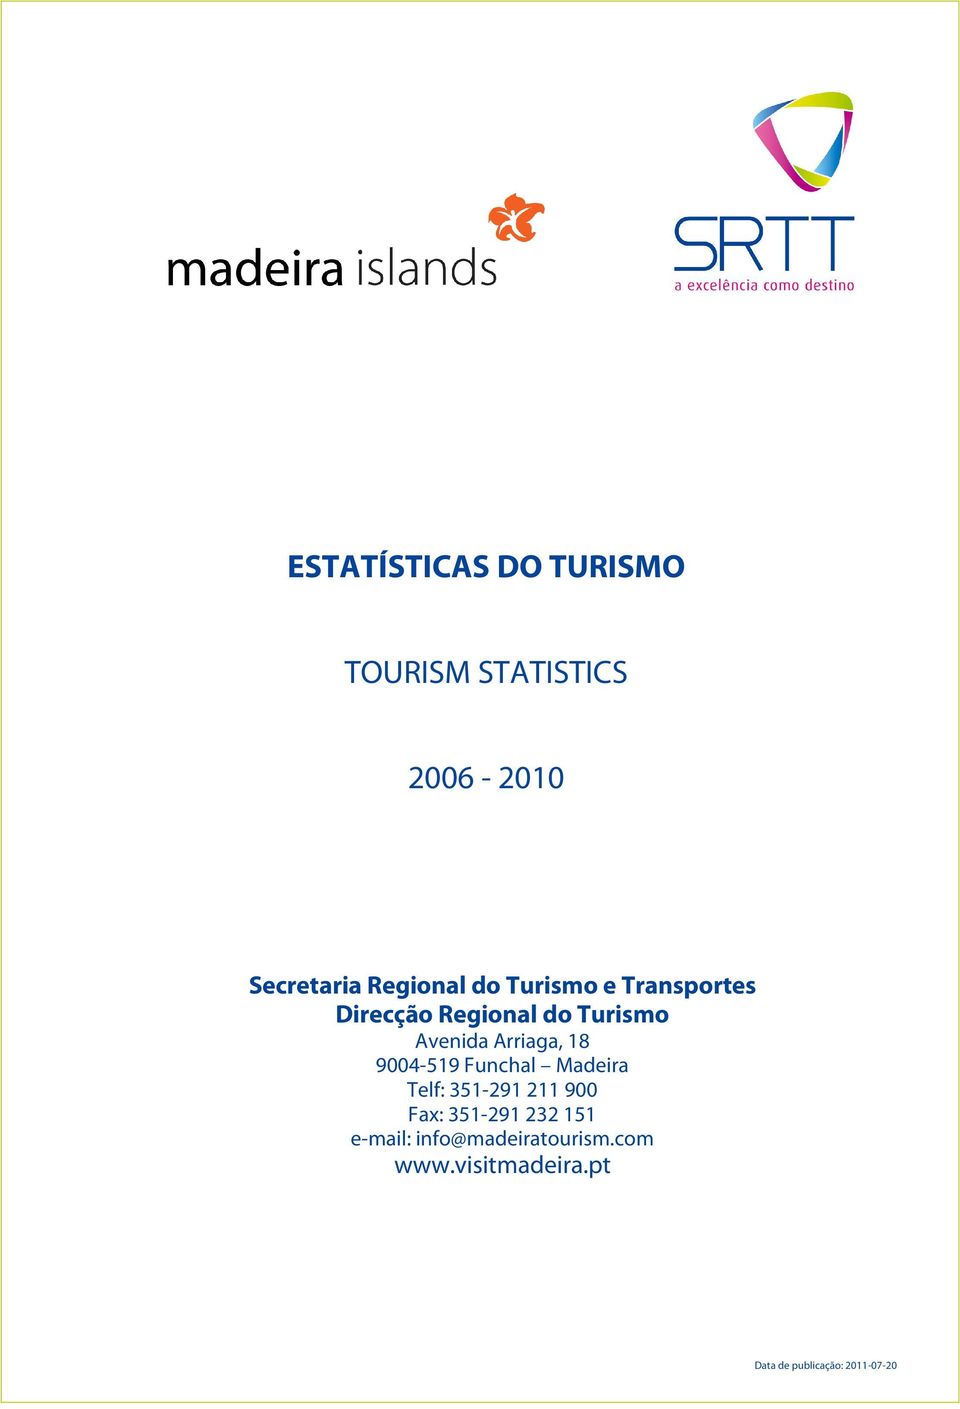 Funchal Madeira Telf: 351-291 211 900 Fax: 351-291 232 151 e-mail: